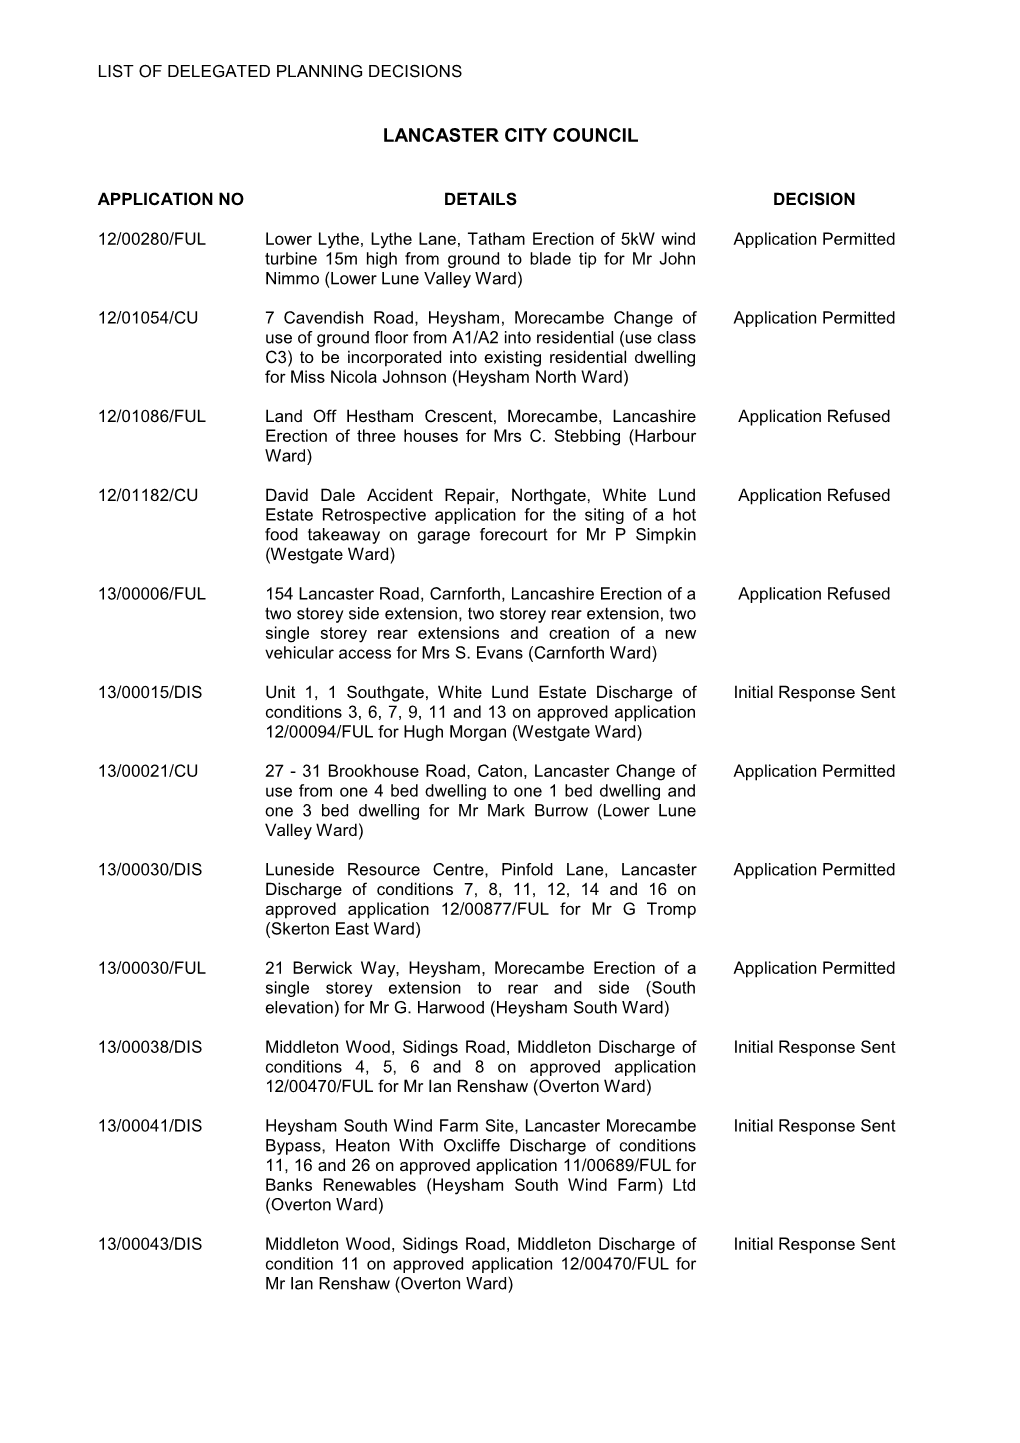 List of Delegated Planning Decisions PDF 67 KB